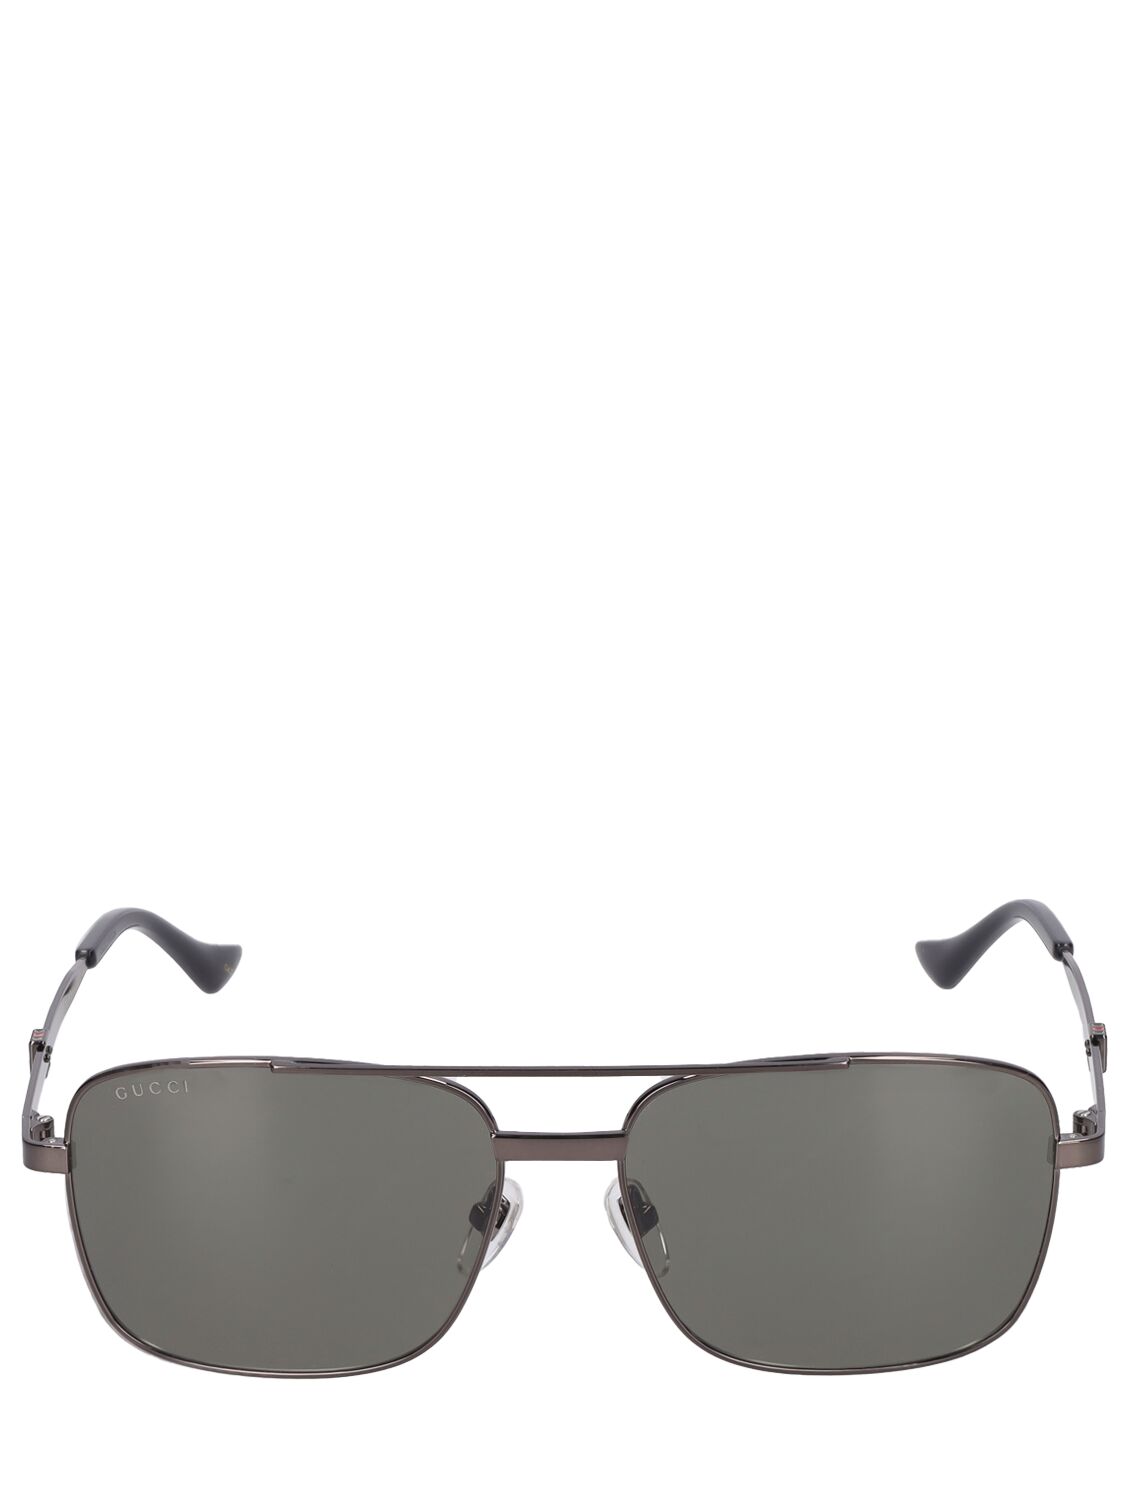 Image of Gg1441s Metal Sunglasses